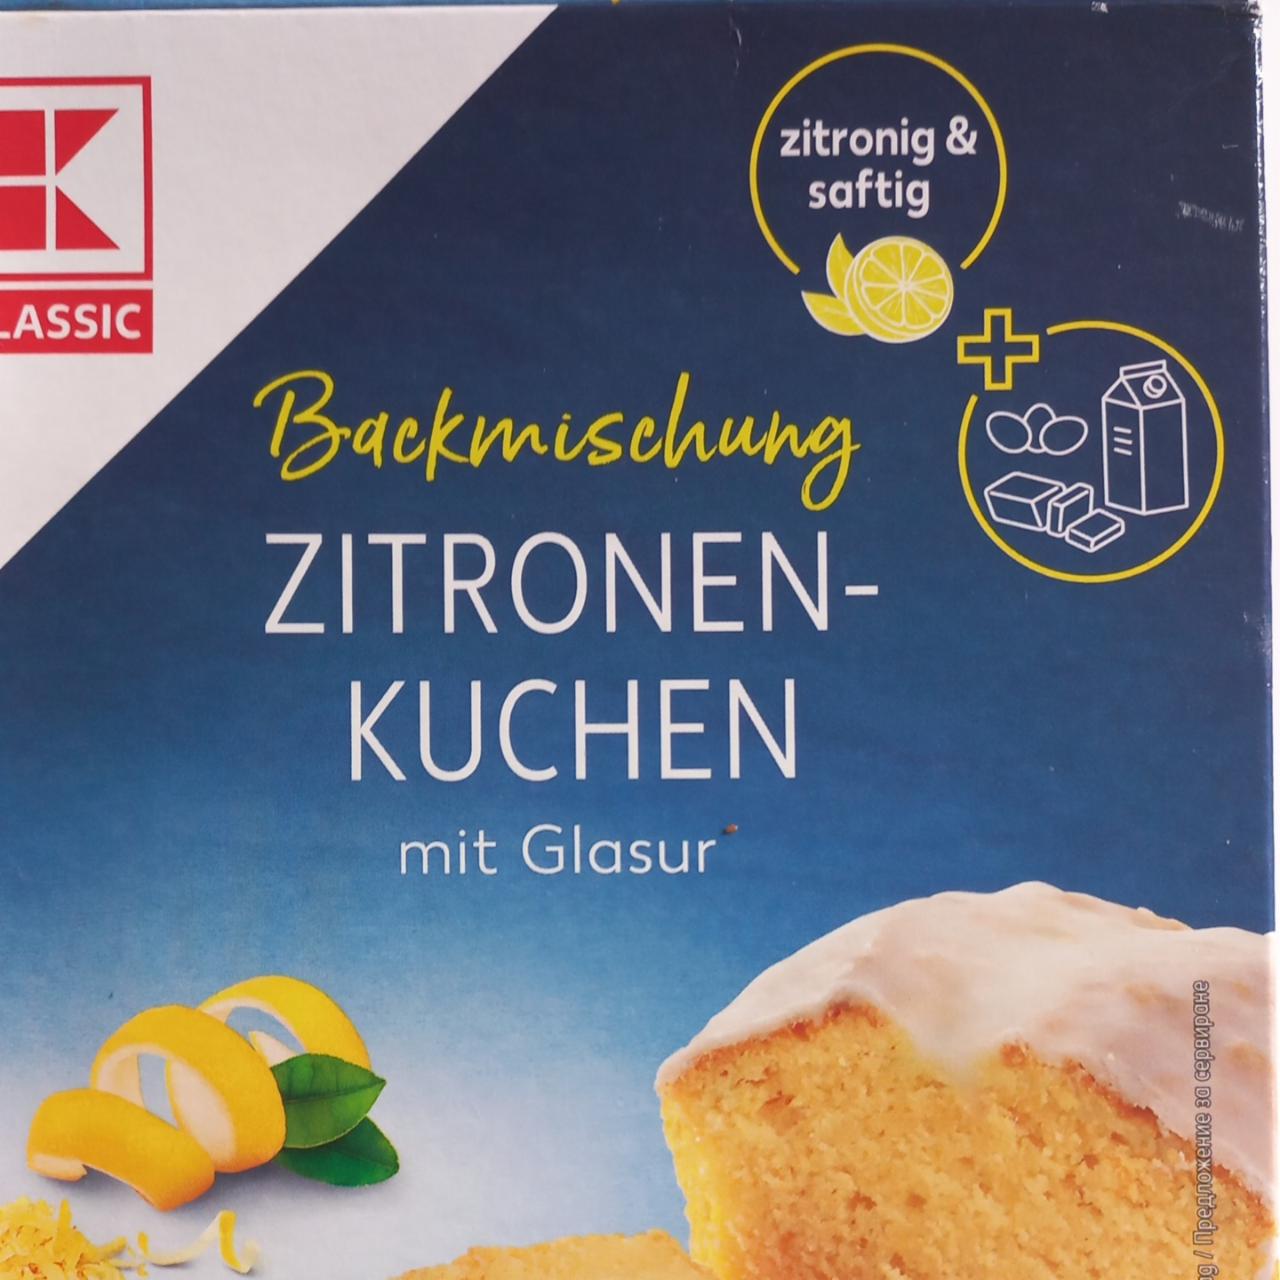 Fotografie - Backmischung Zitronen-Kuchen mit Glasur K-Classic